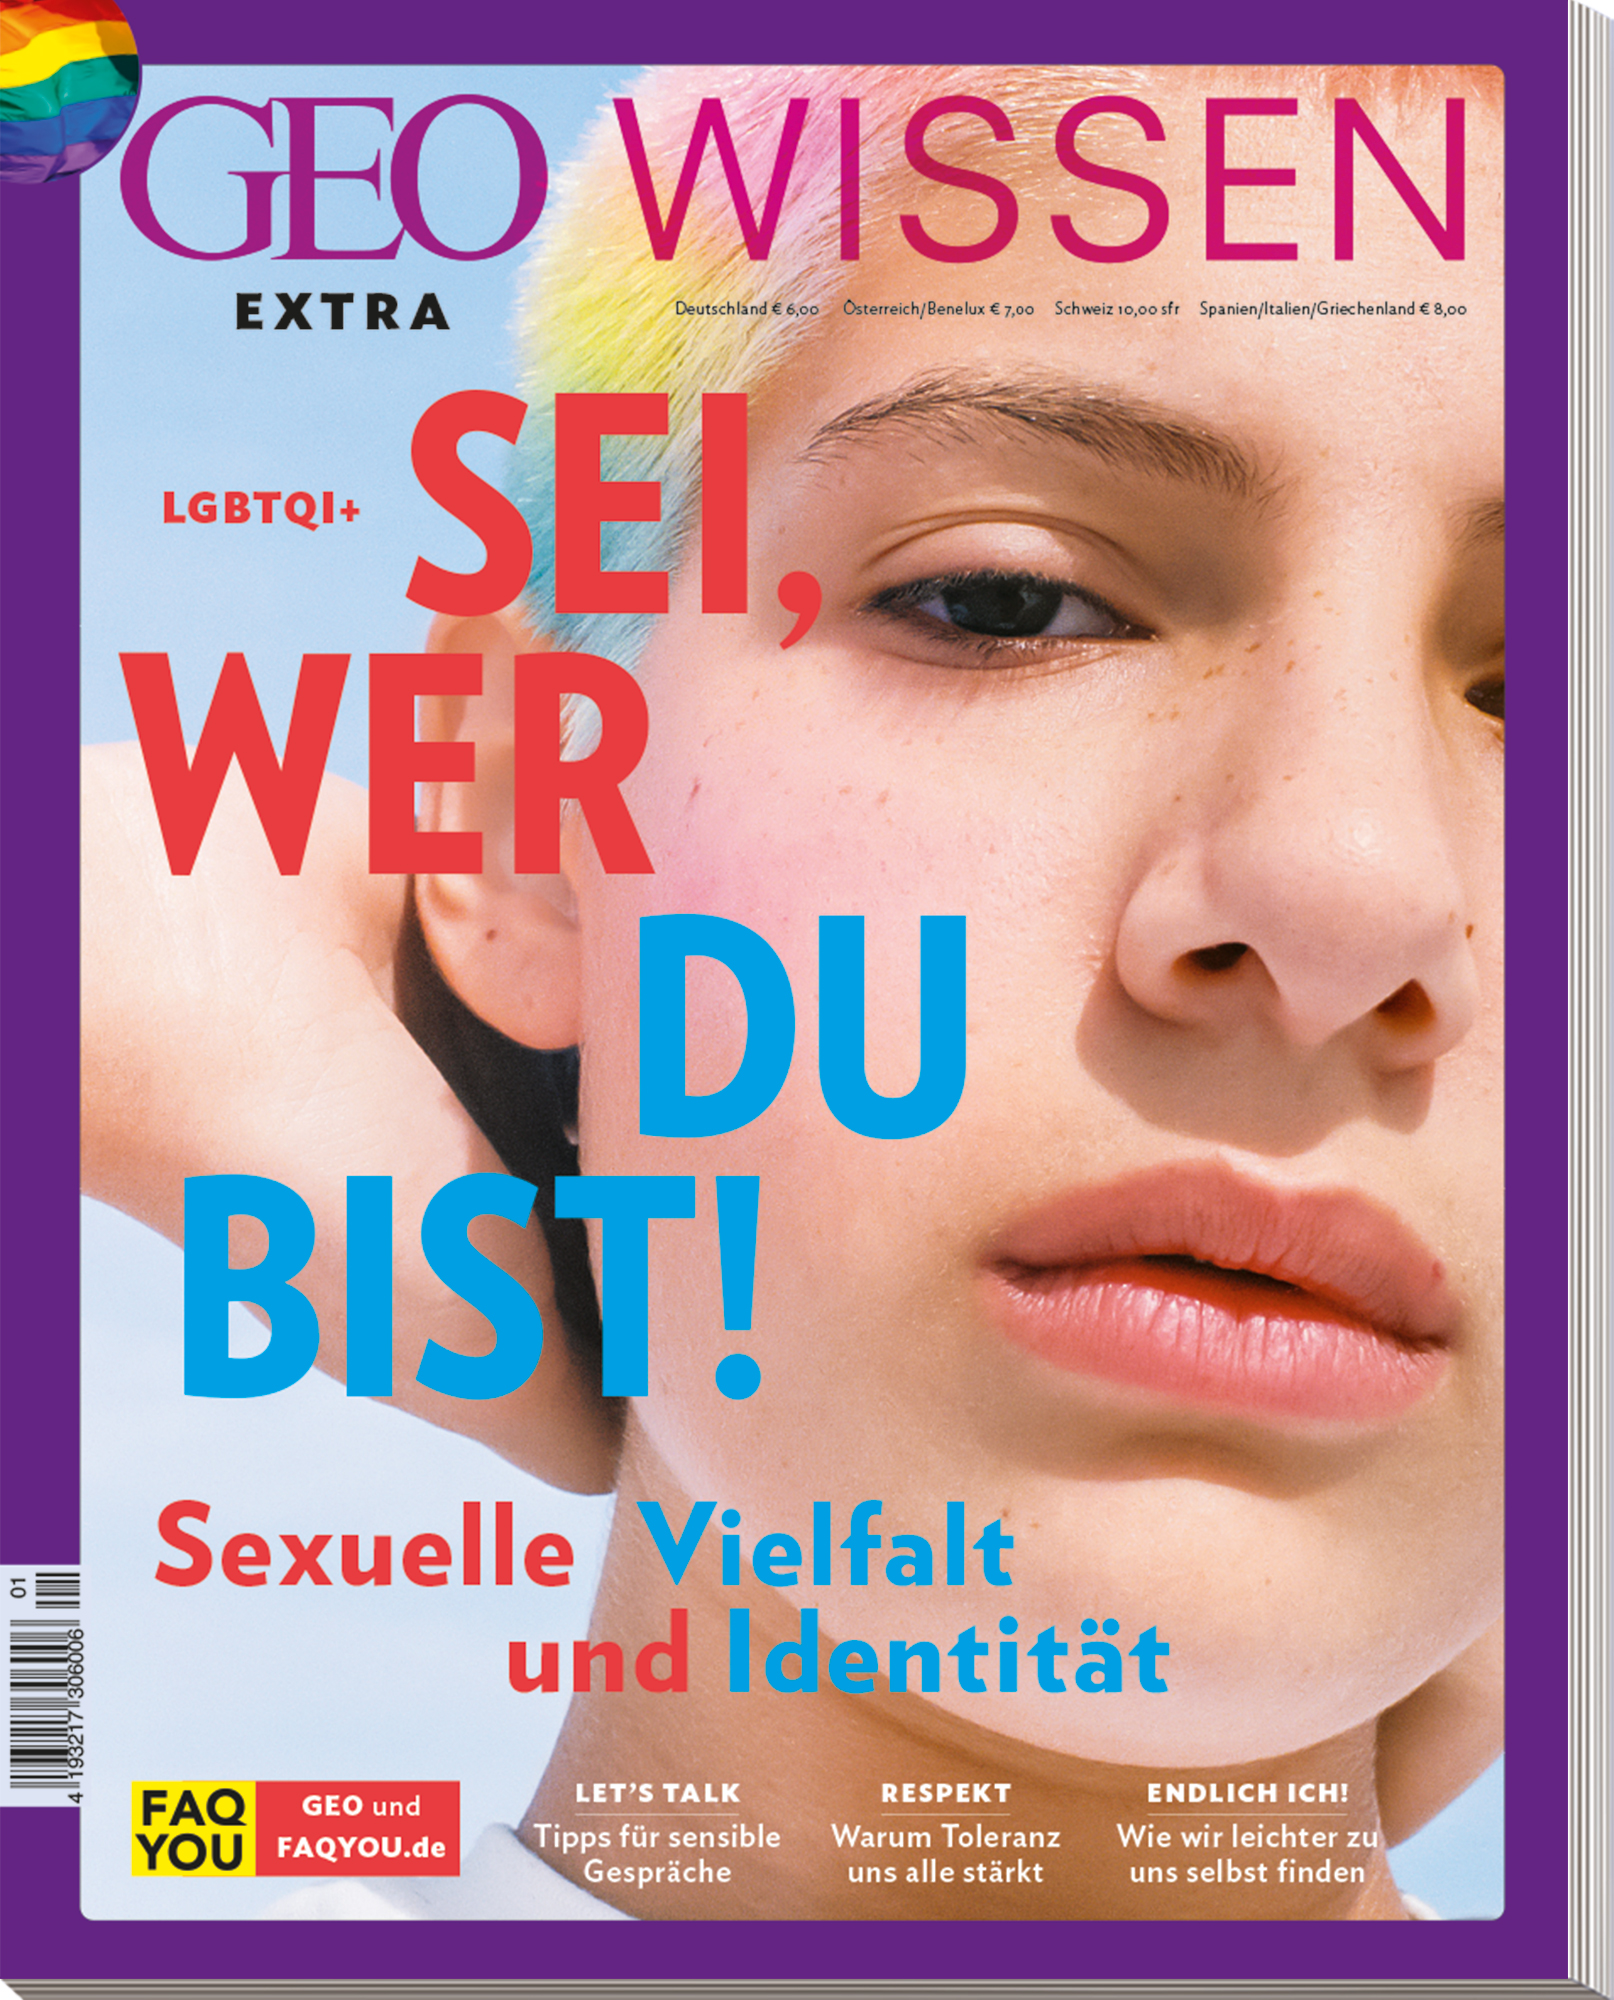 GEO WISSEN EXTRA 01/22 LGBTQI+